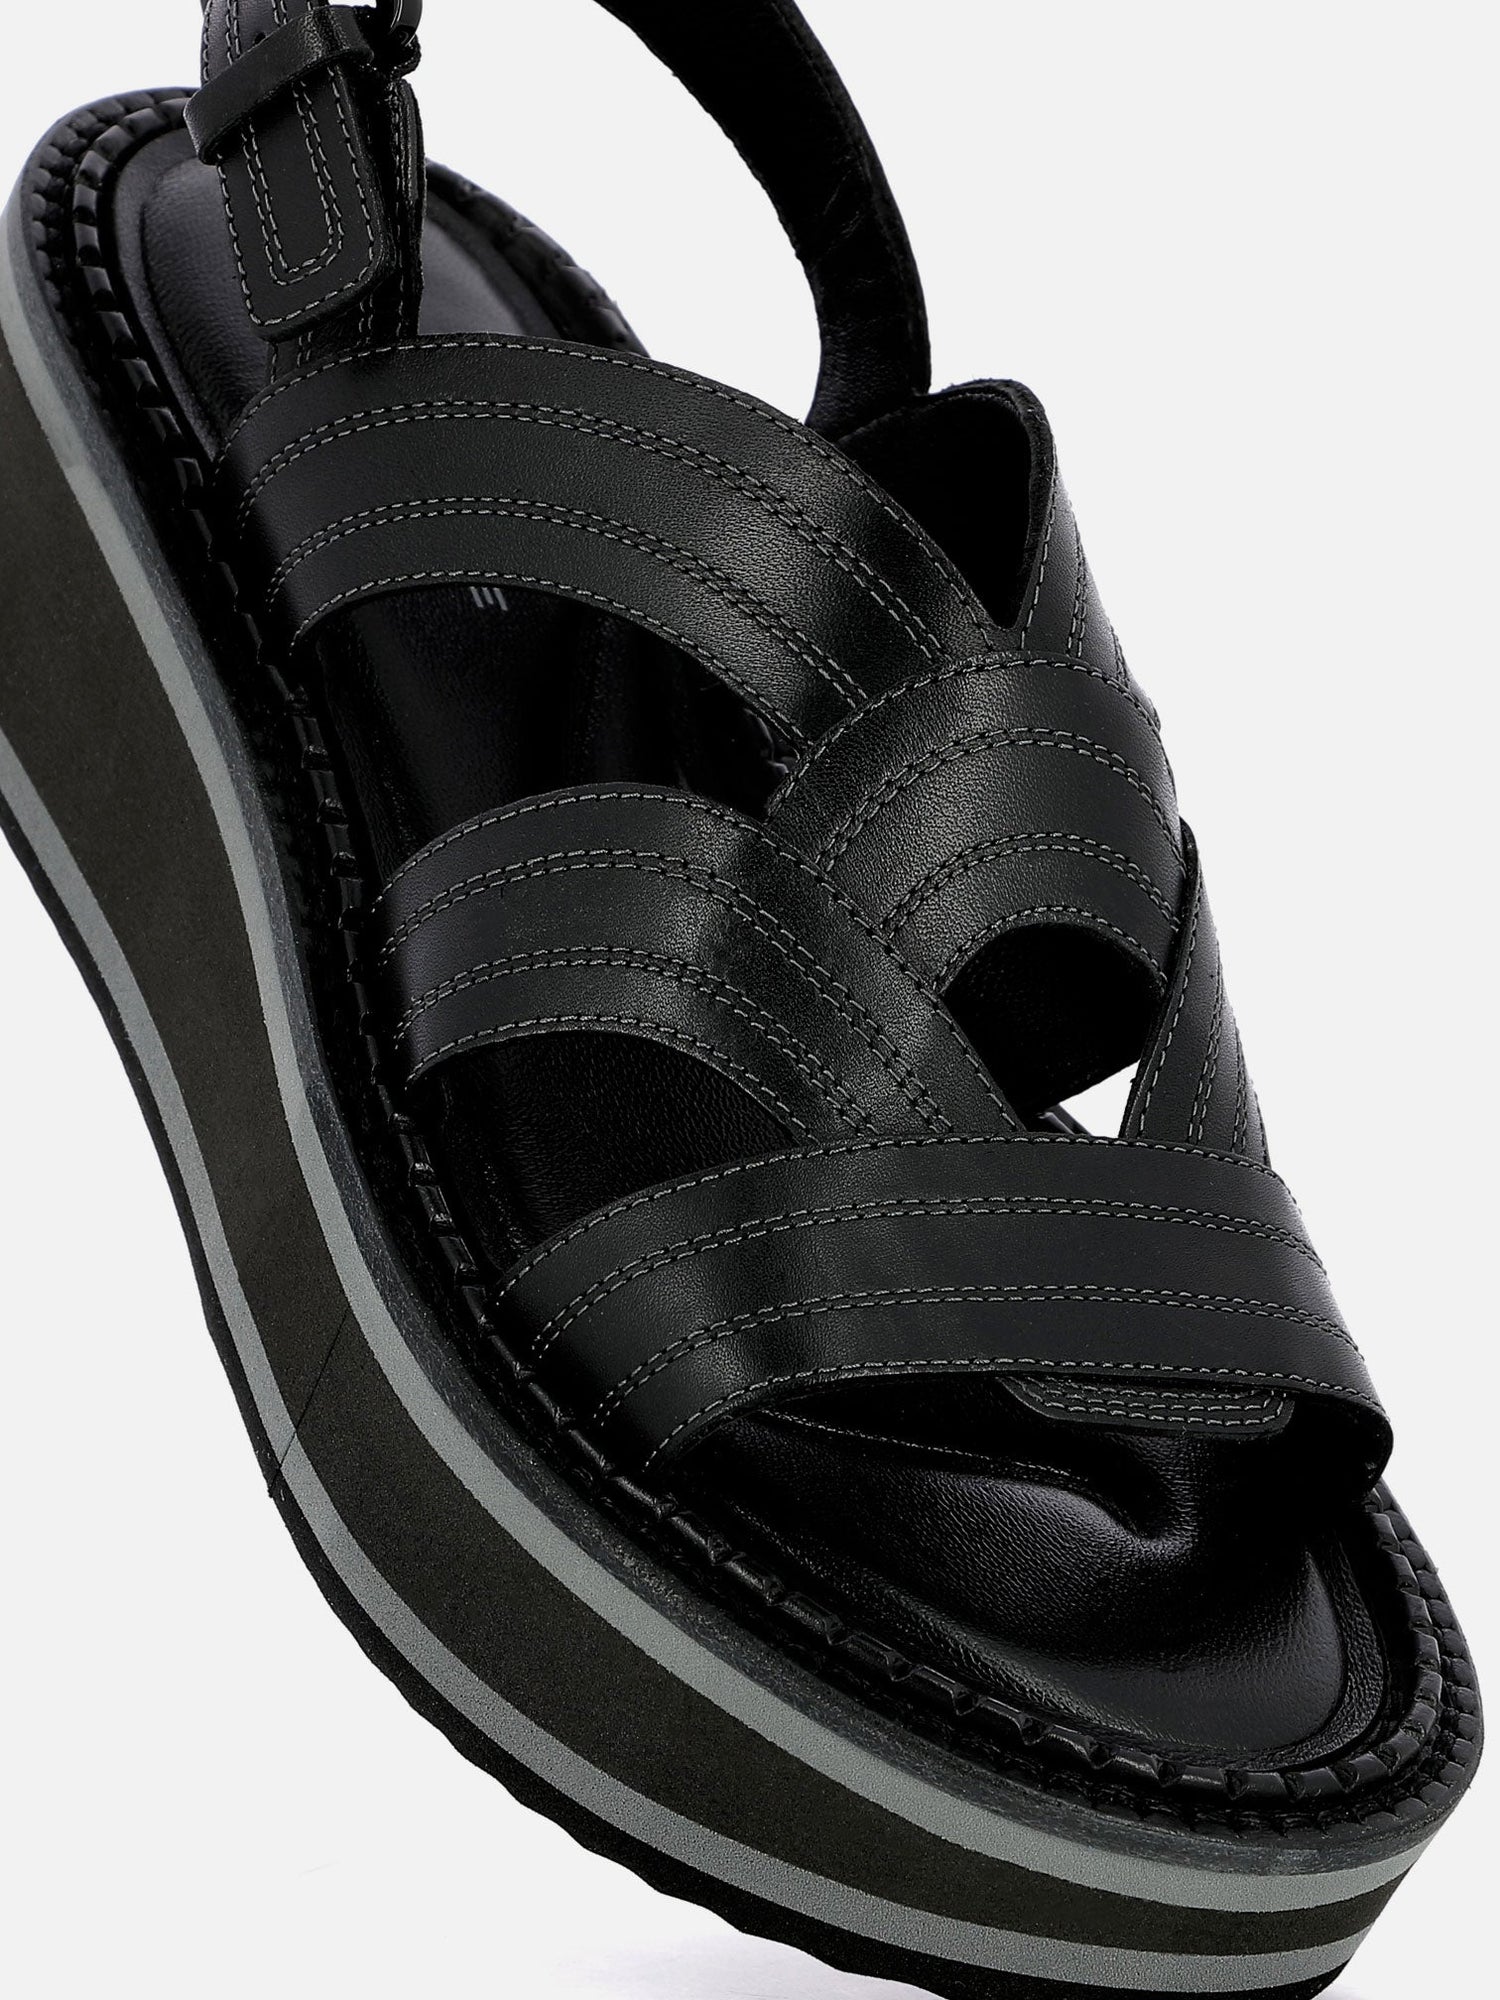 SANDALS - FRESIA sandals, calfskin black - 3606063965019 - Clergerie Paris - Europe